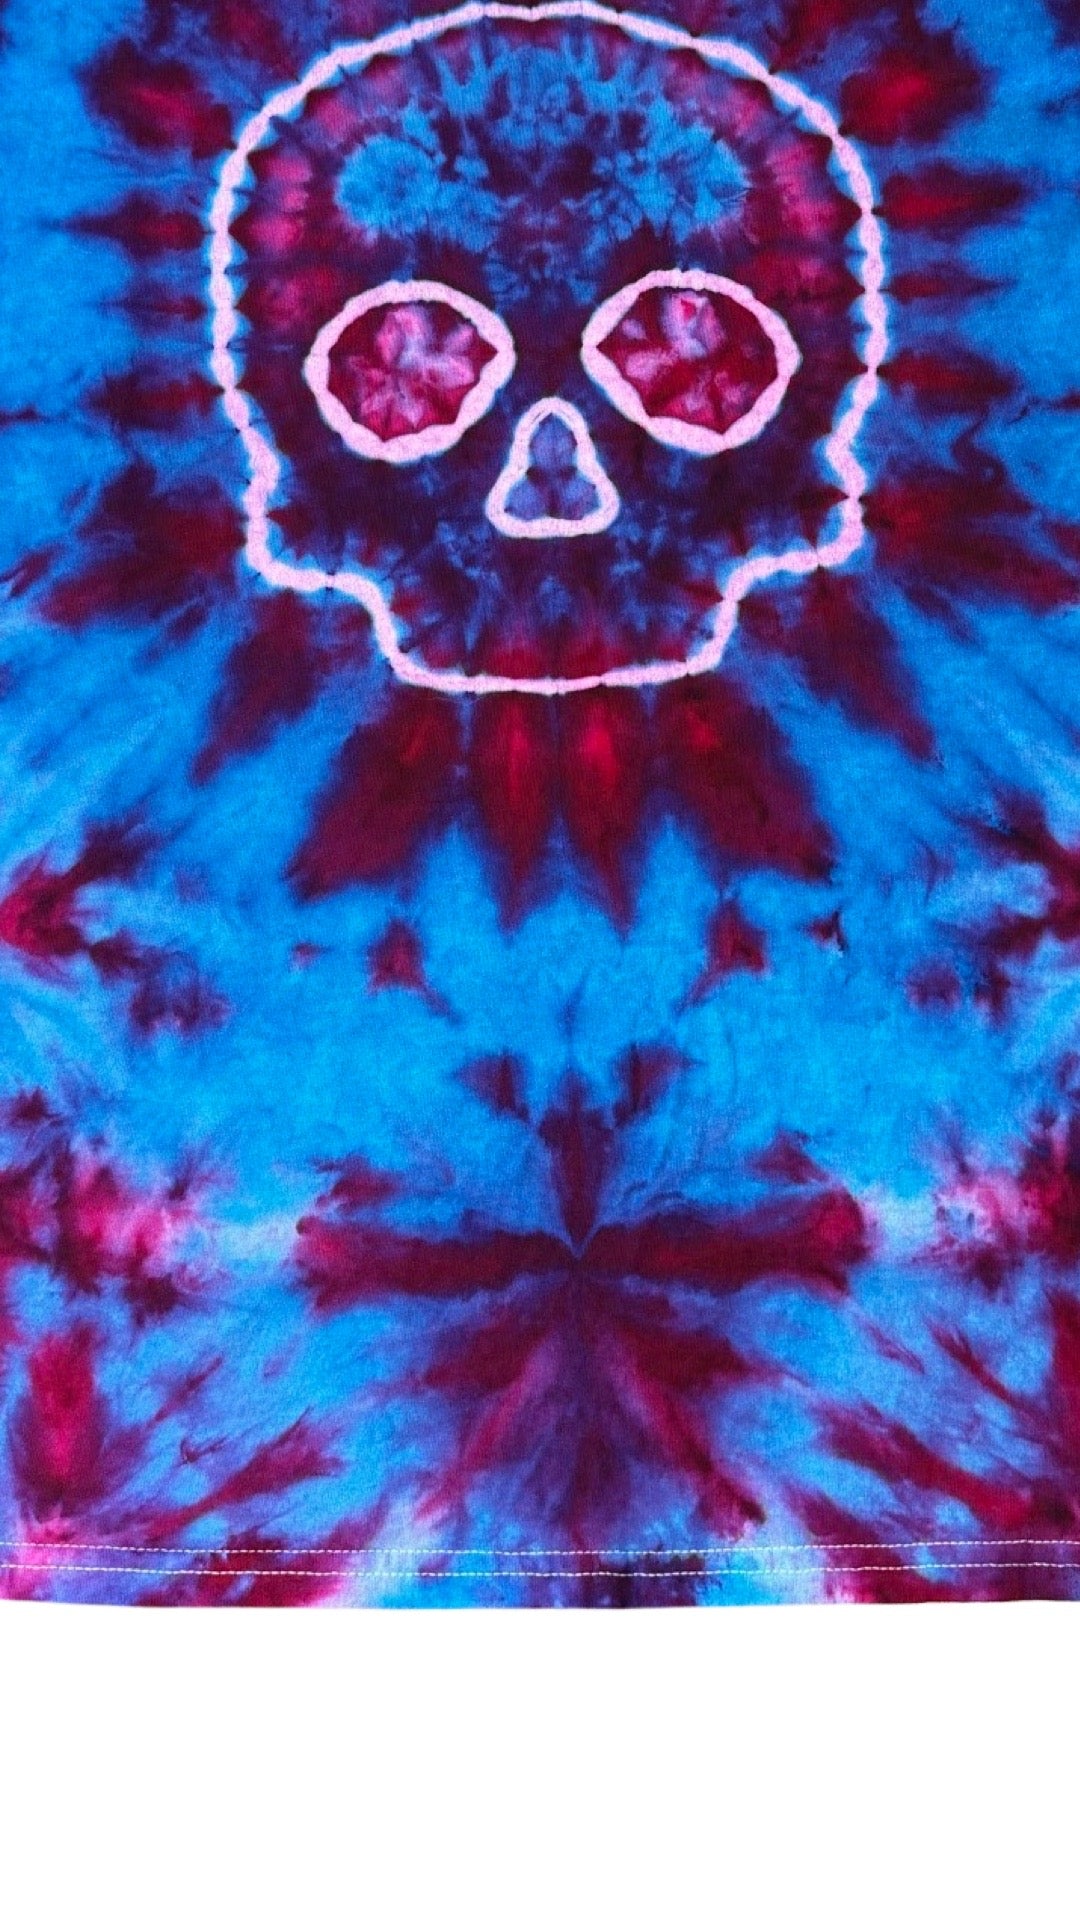 Cotton Candy Skull Tie Dye Tee Shirt